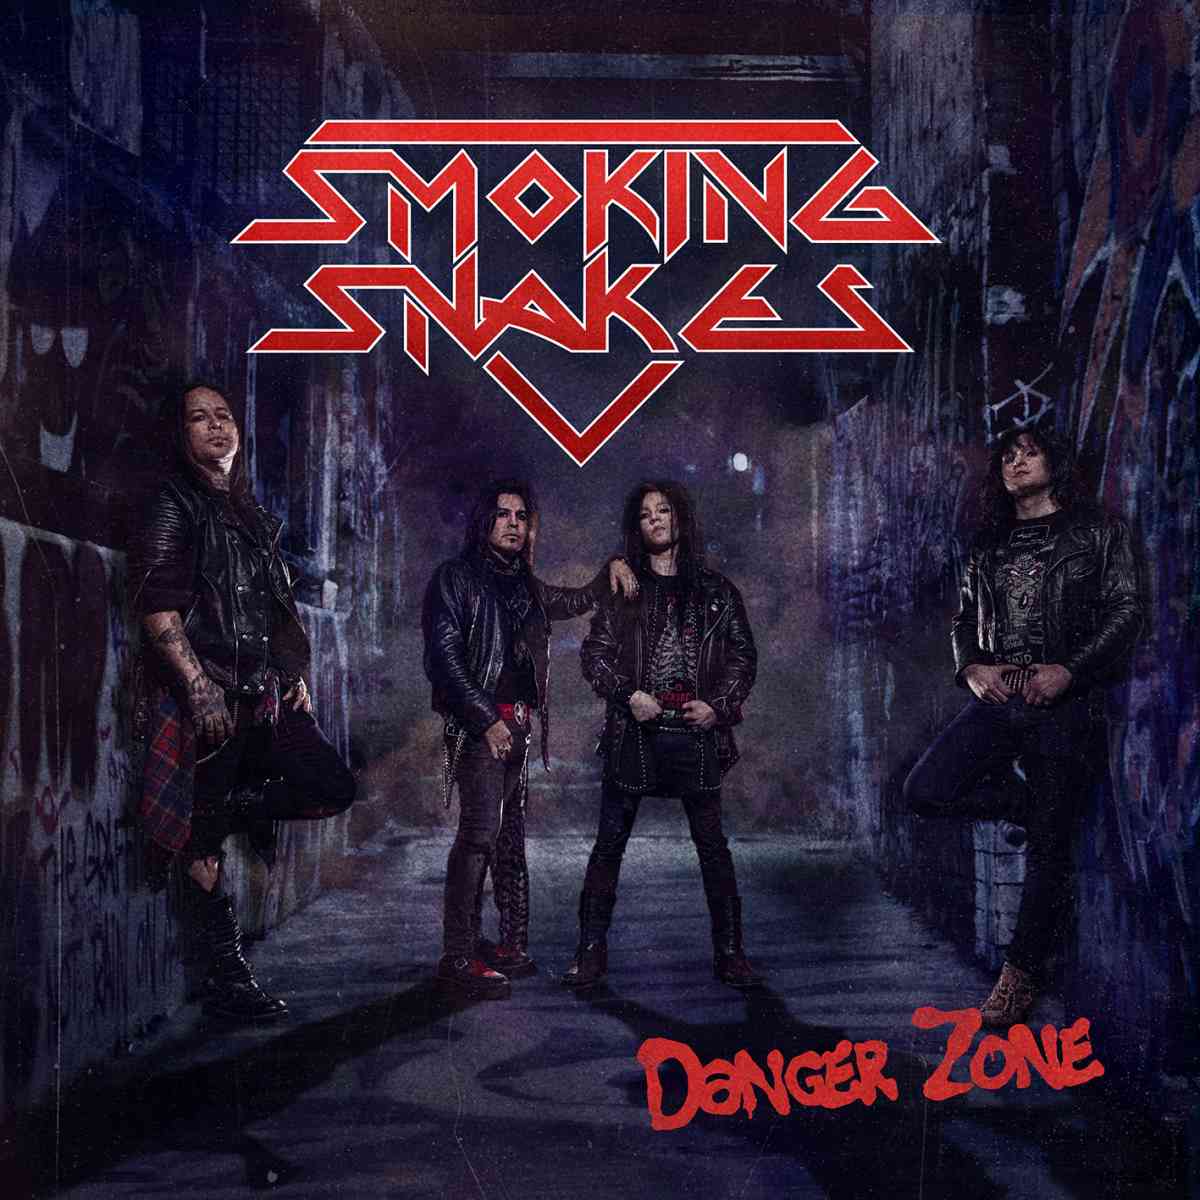 smokin snakes - danger zone - album cover